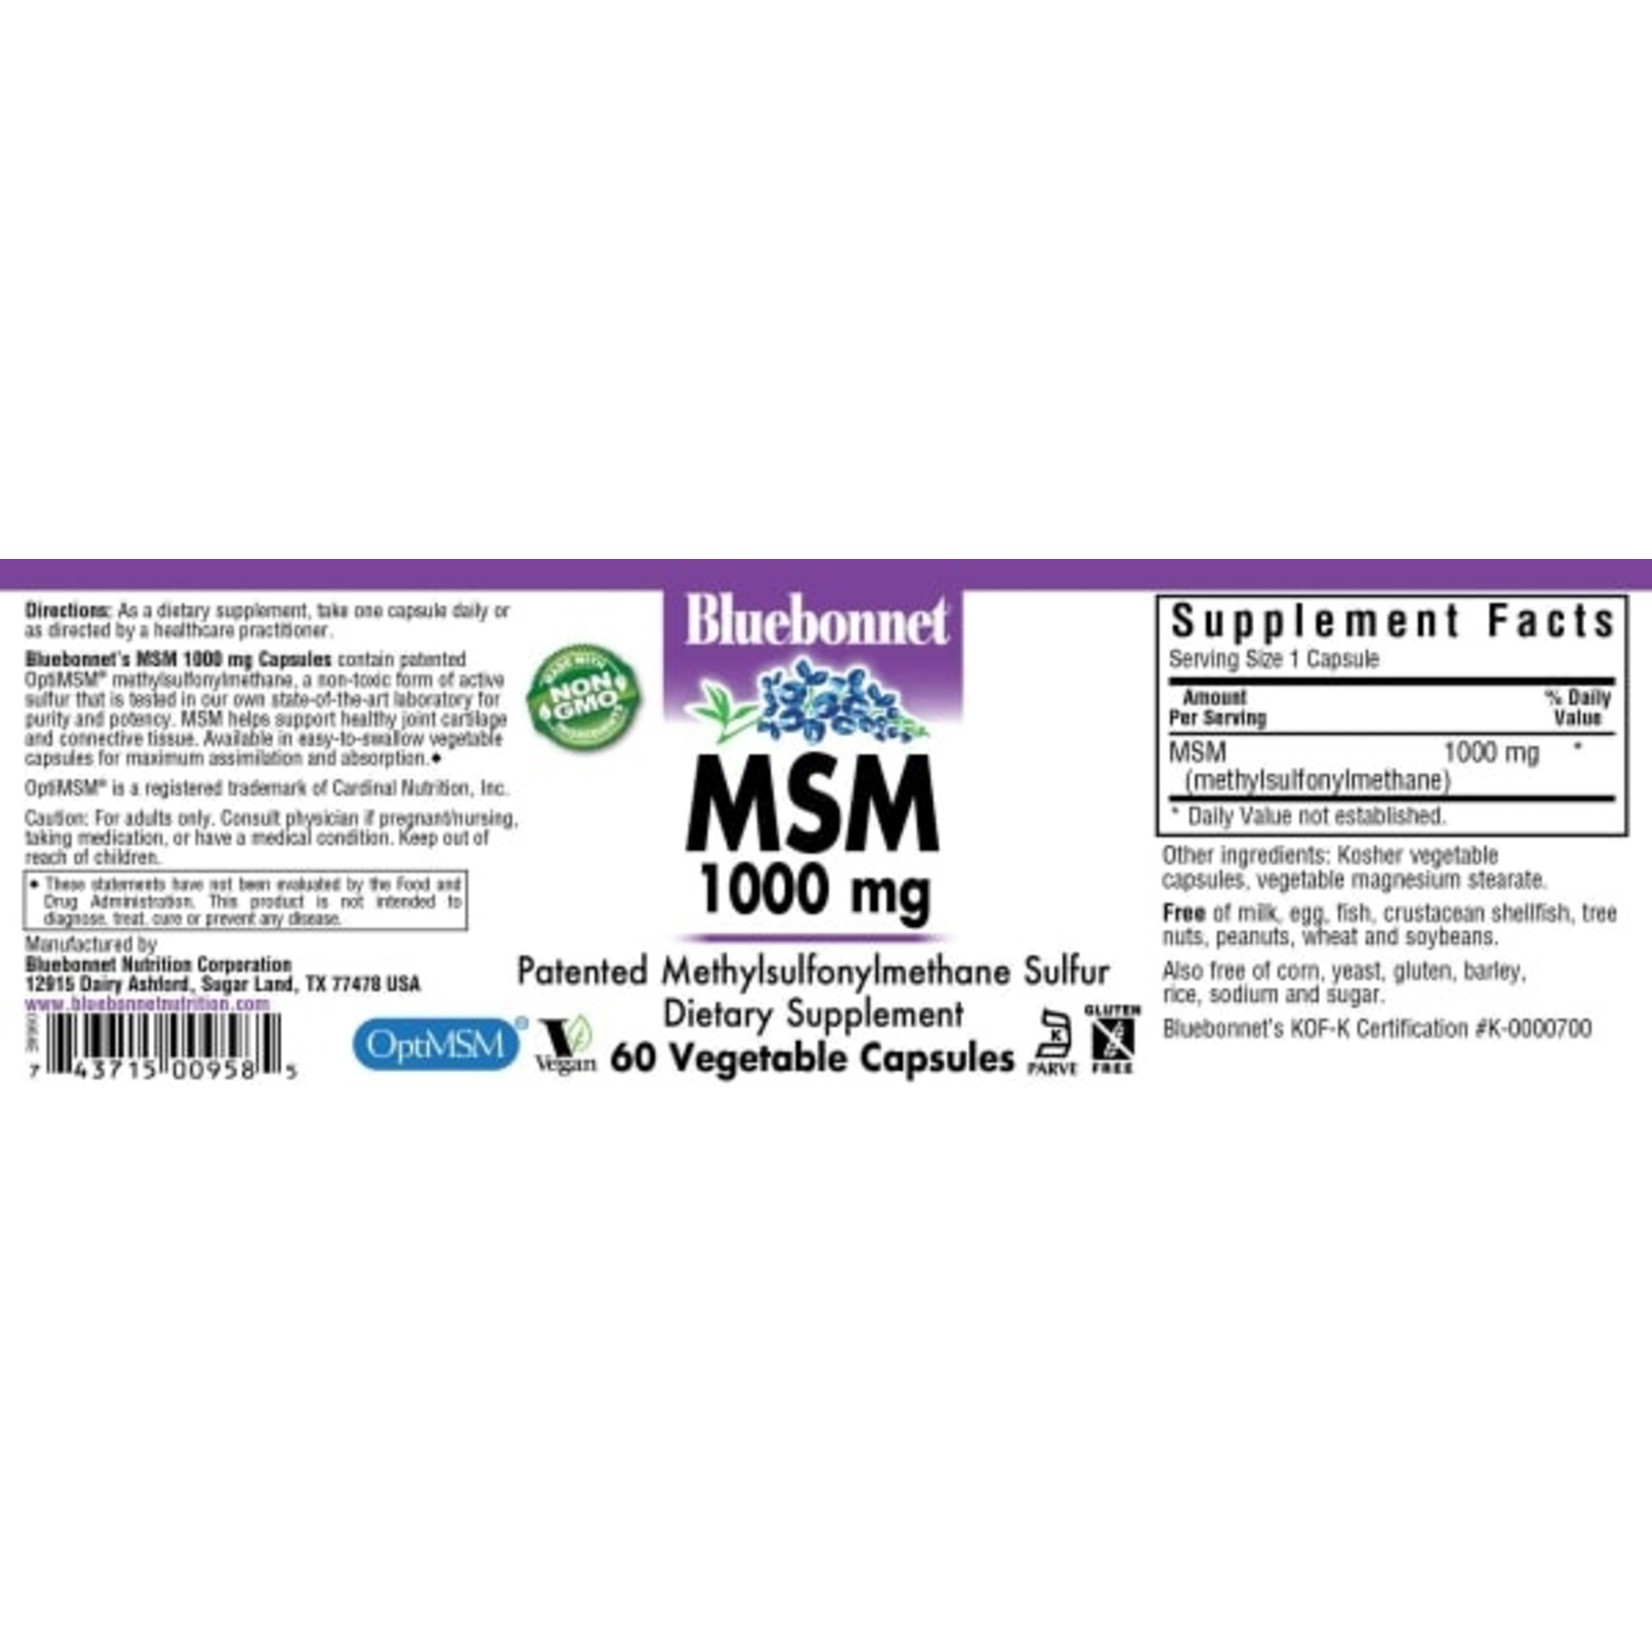 Bluebonnet Bluebonnet - MSM 1000 mg - 60 Veg Capsules